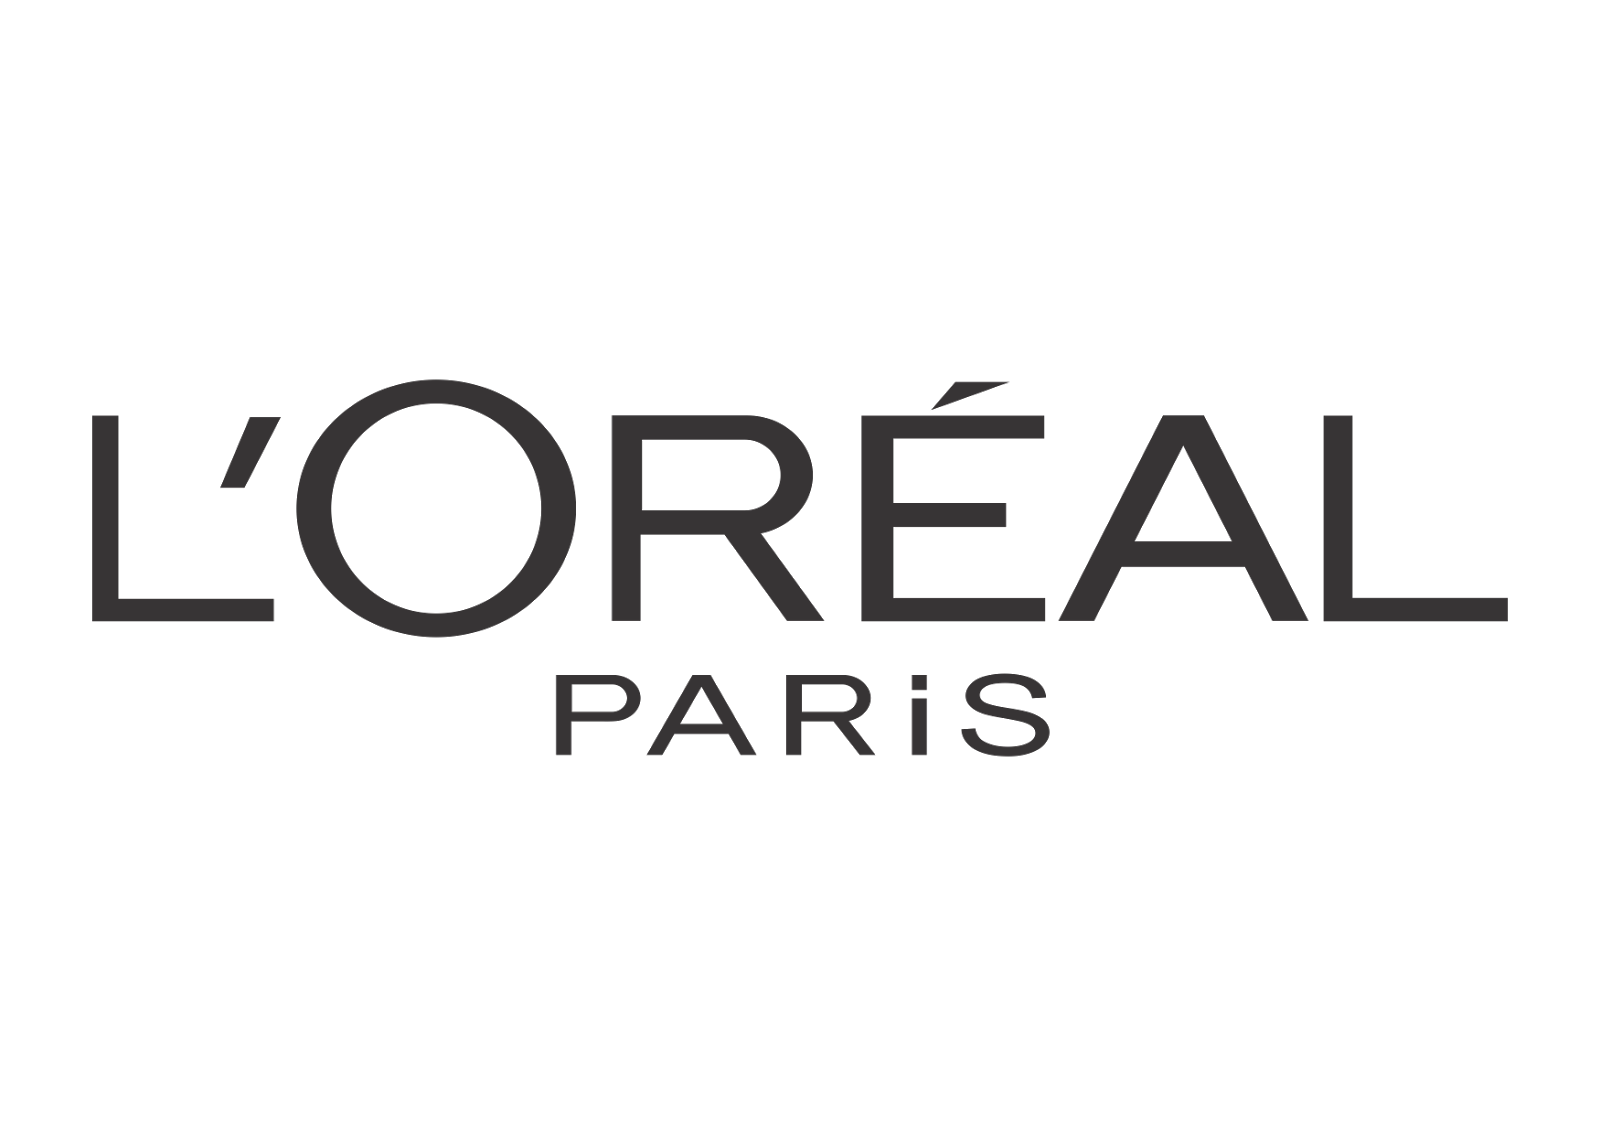 Loreal-paris-logo-vector.png